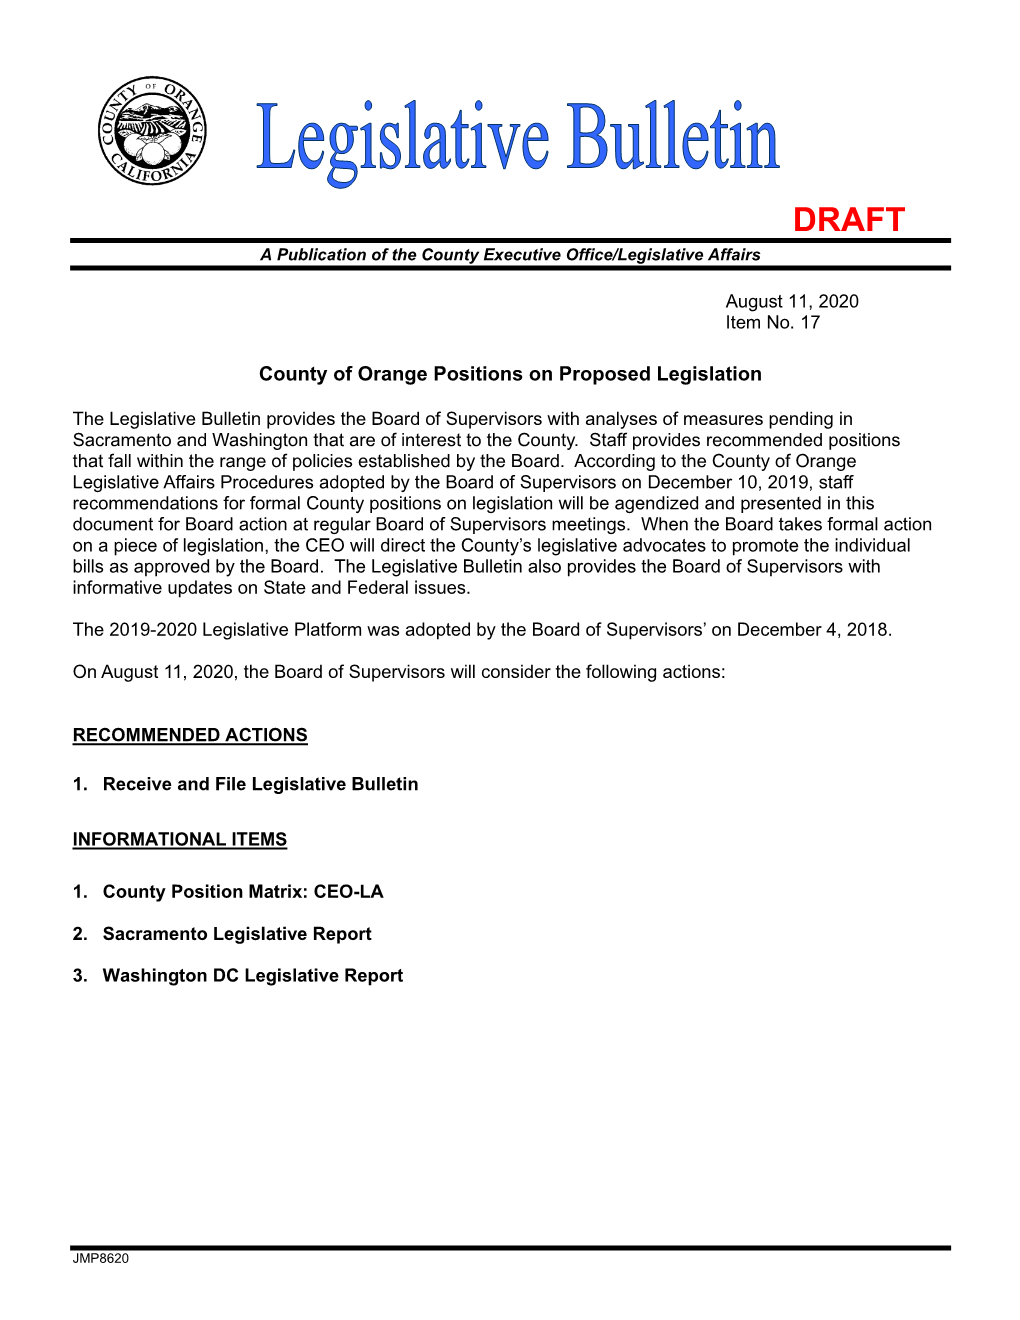 County of Orange Positions on Proposed Legislation